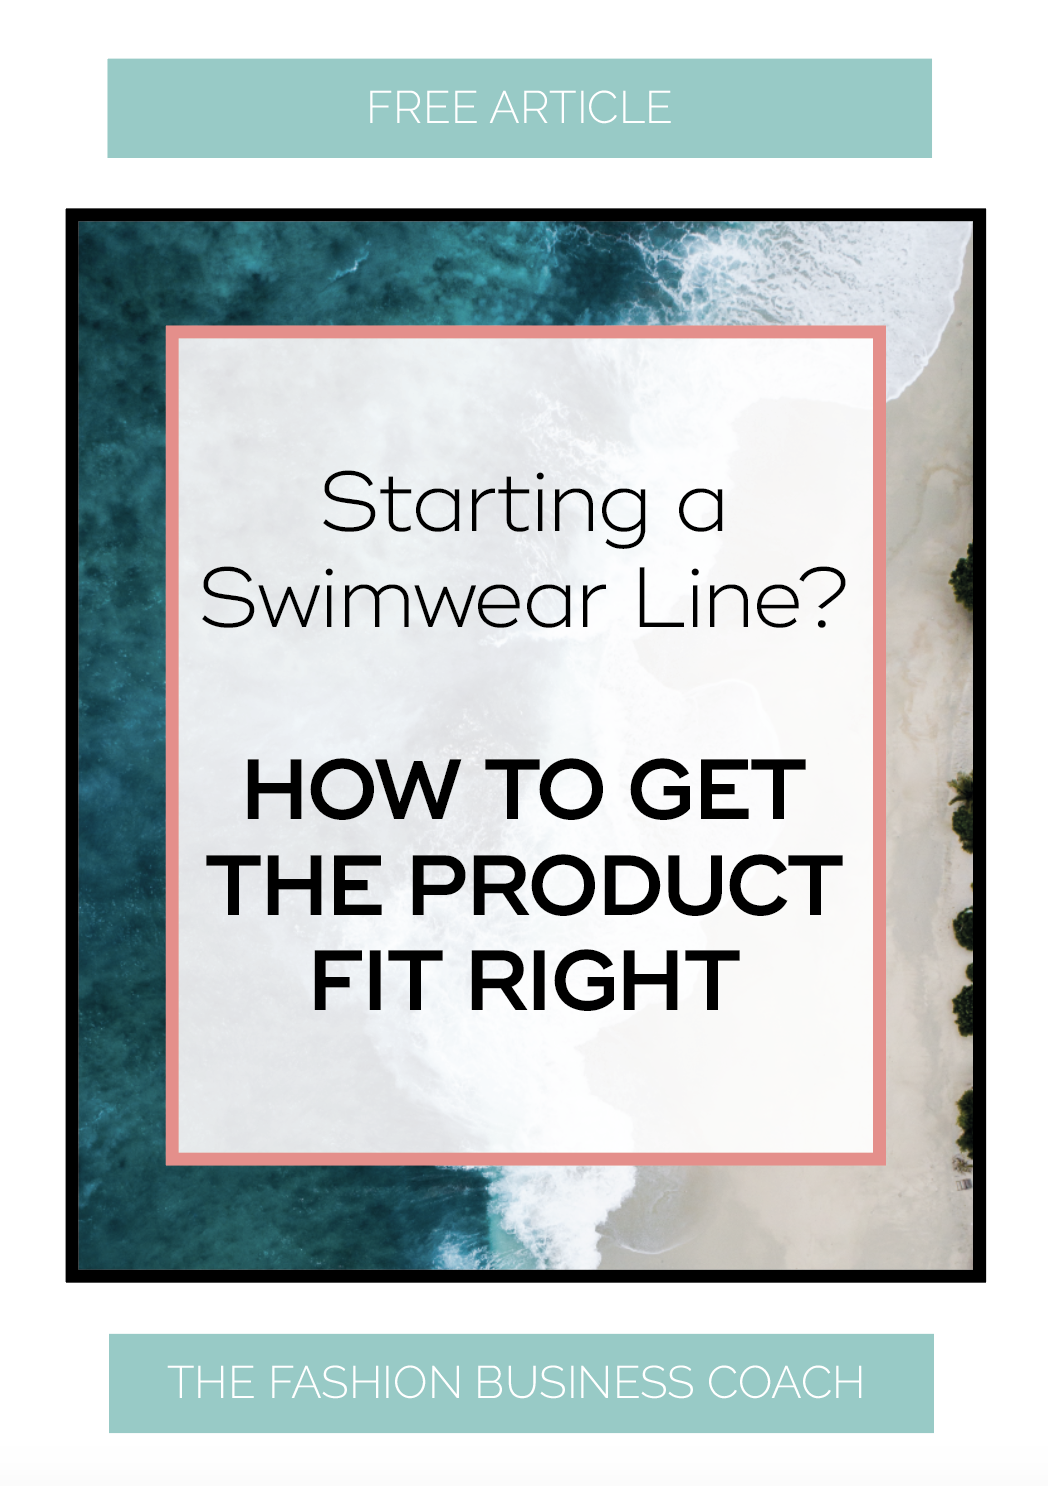 Starting a Swimwear Line 1.png